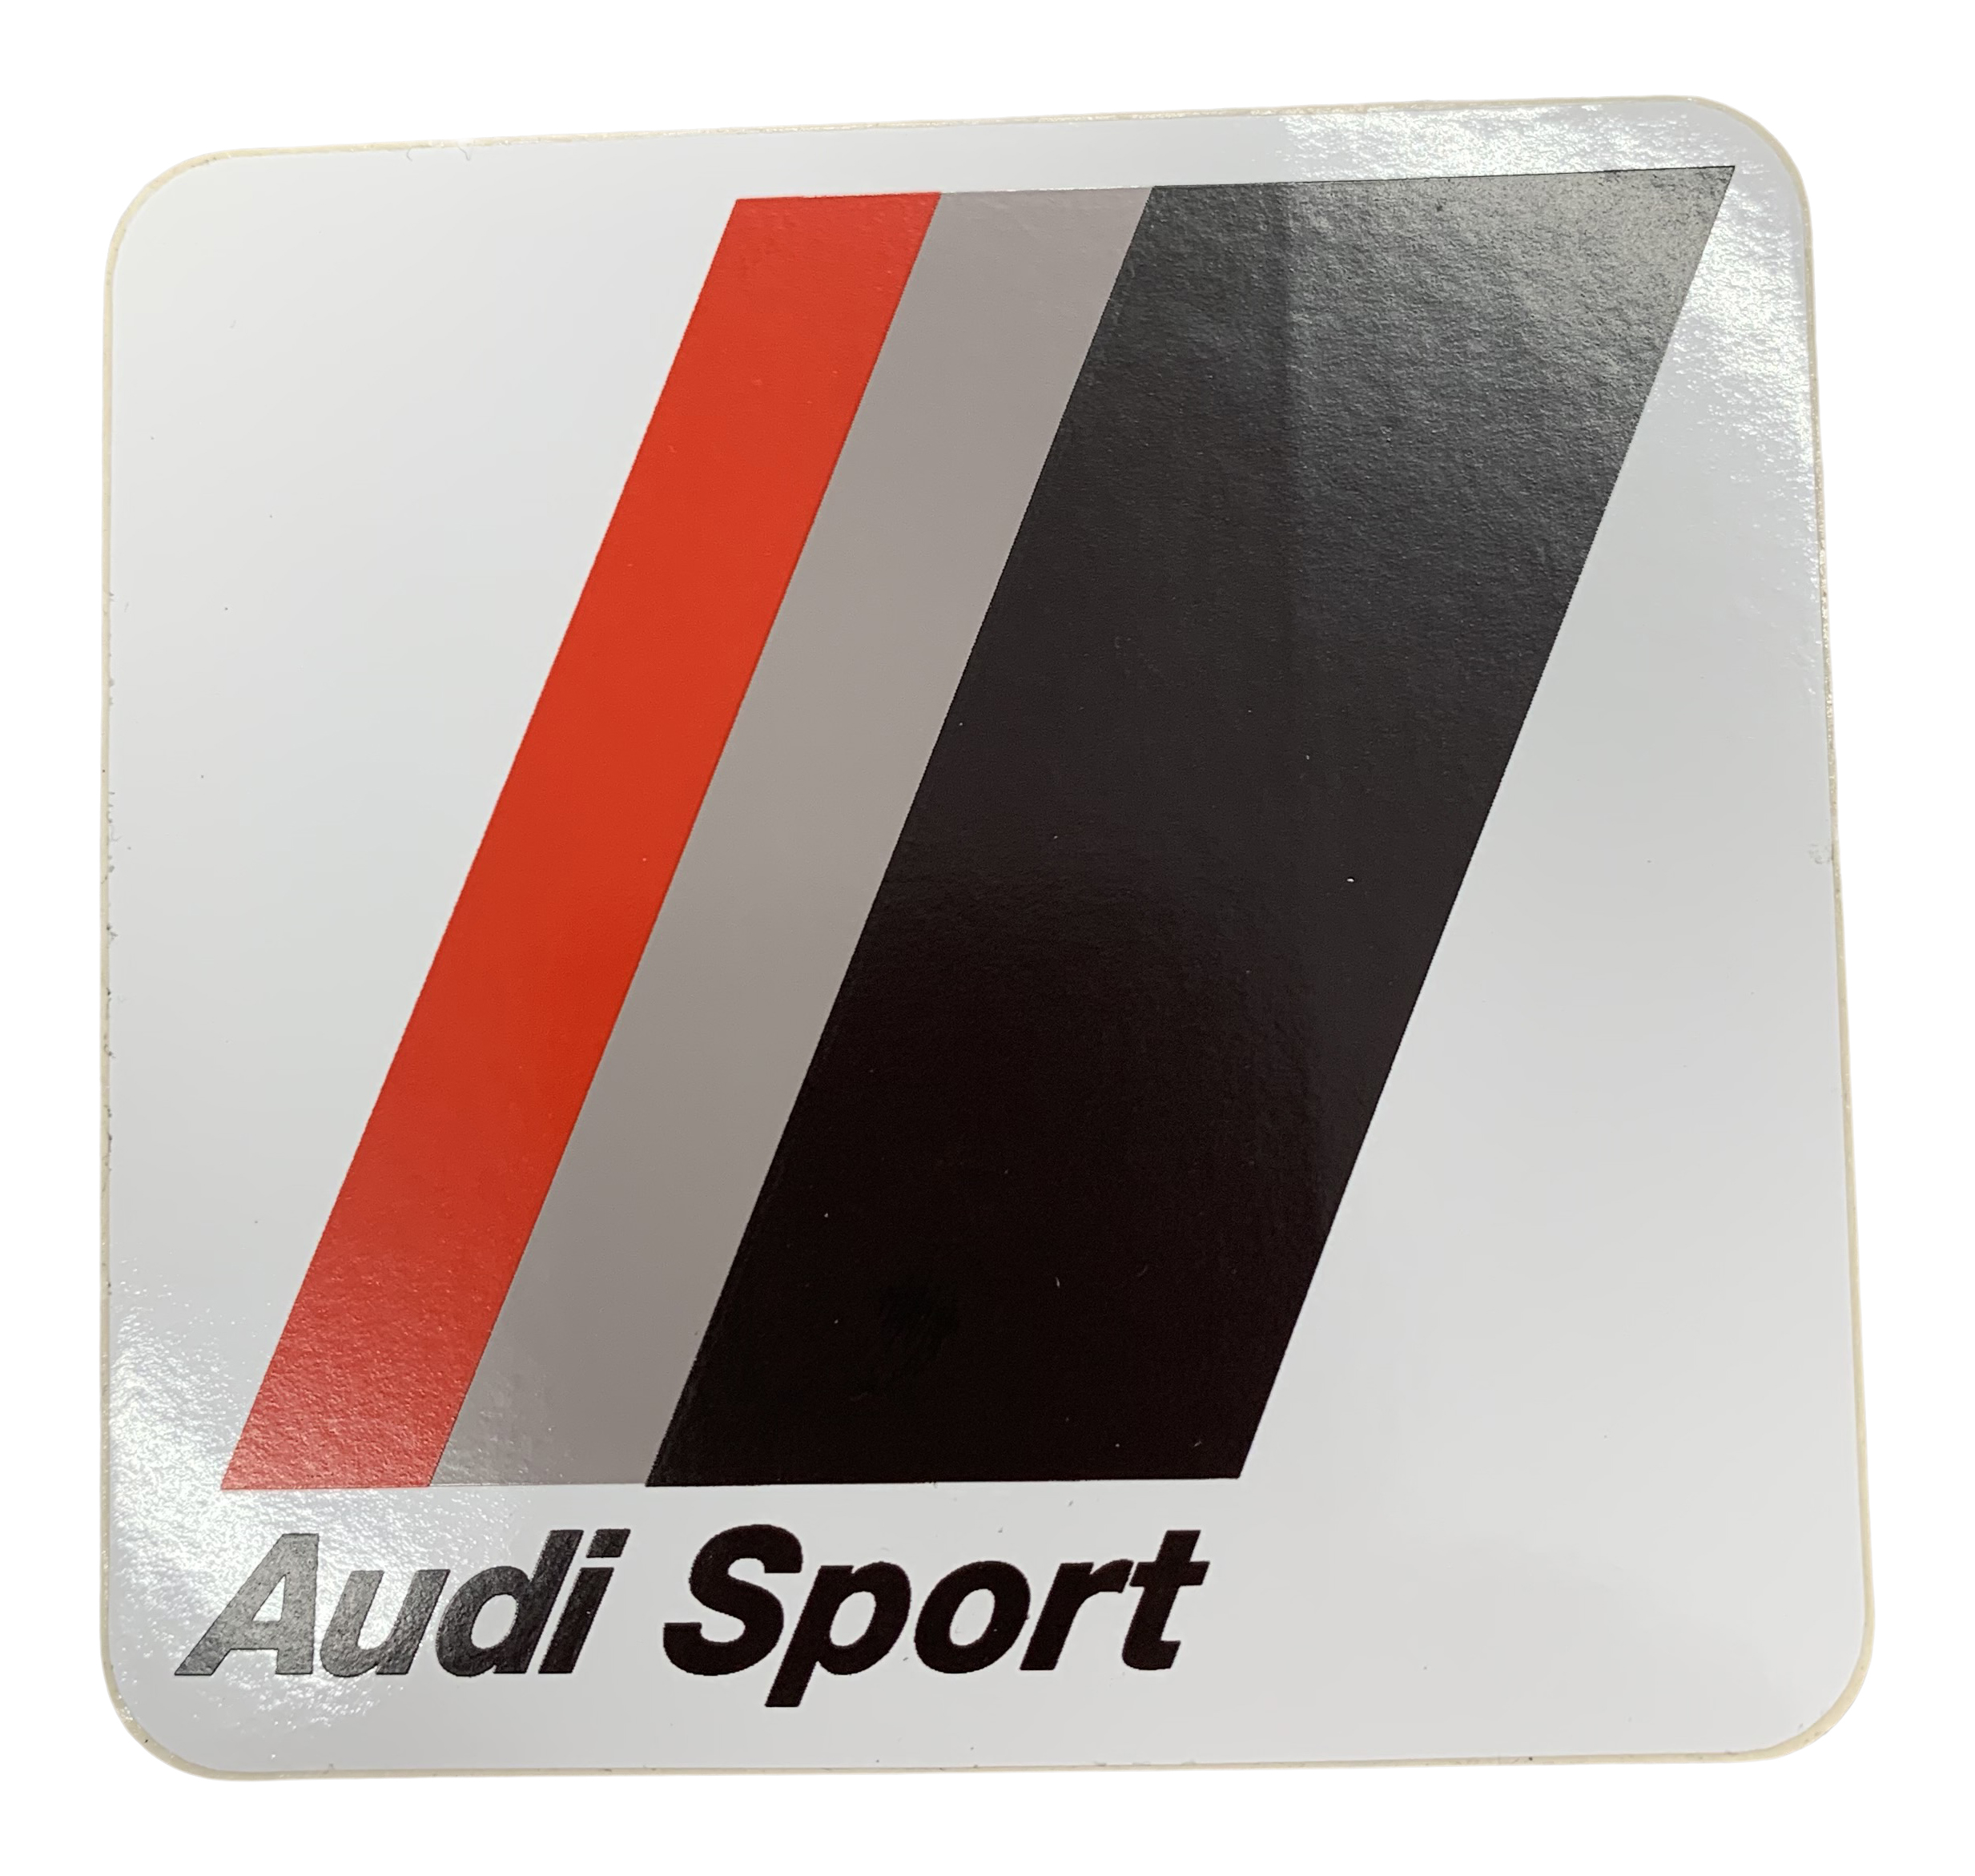 https://cdn02.plentymarkets.com/wzbw62w1ggeh/item/images/171618469/full/Original-Audi-Sport-Aufkleber-7x7cm-selbstklebend-171618469.jpg